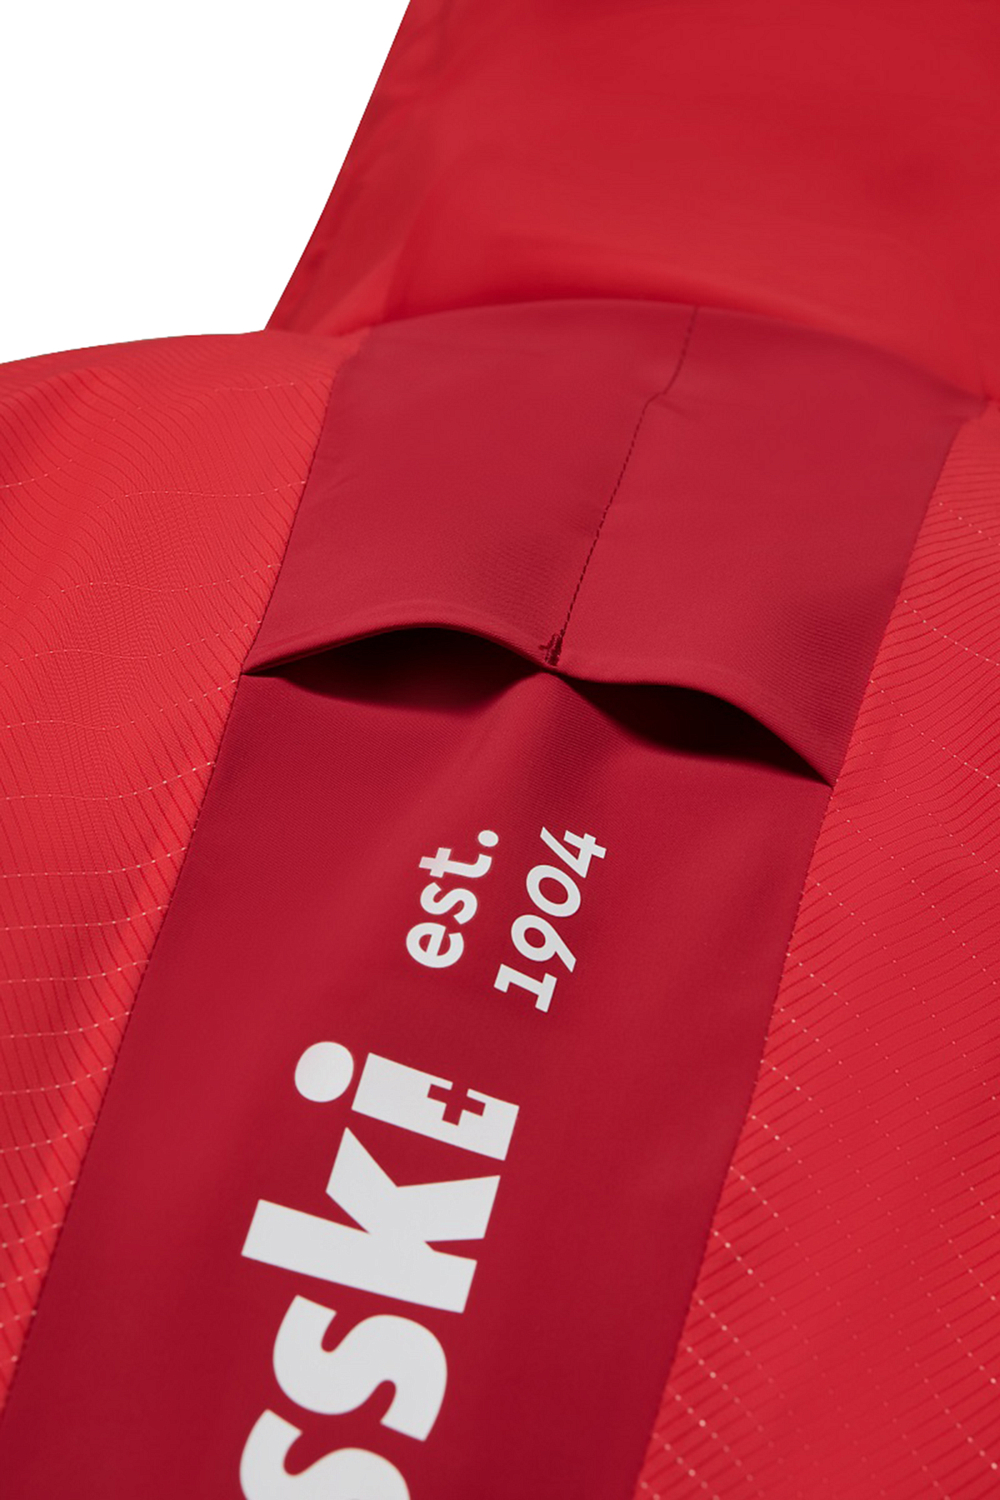 Куртка горнолыжная Descente S.I.O Insulated Jacket Swiss National Team Replica Electric Red